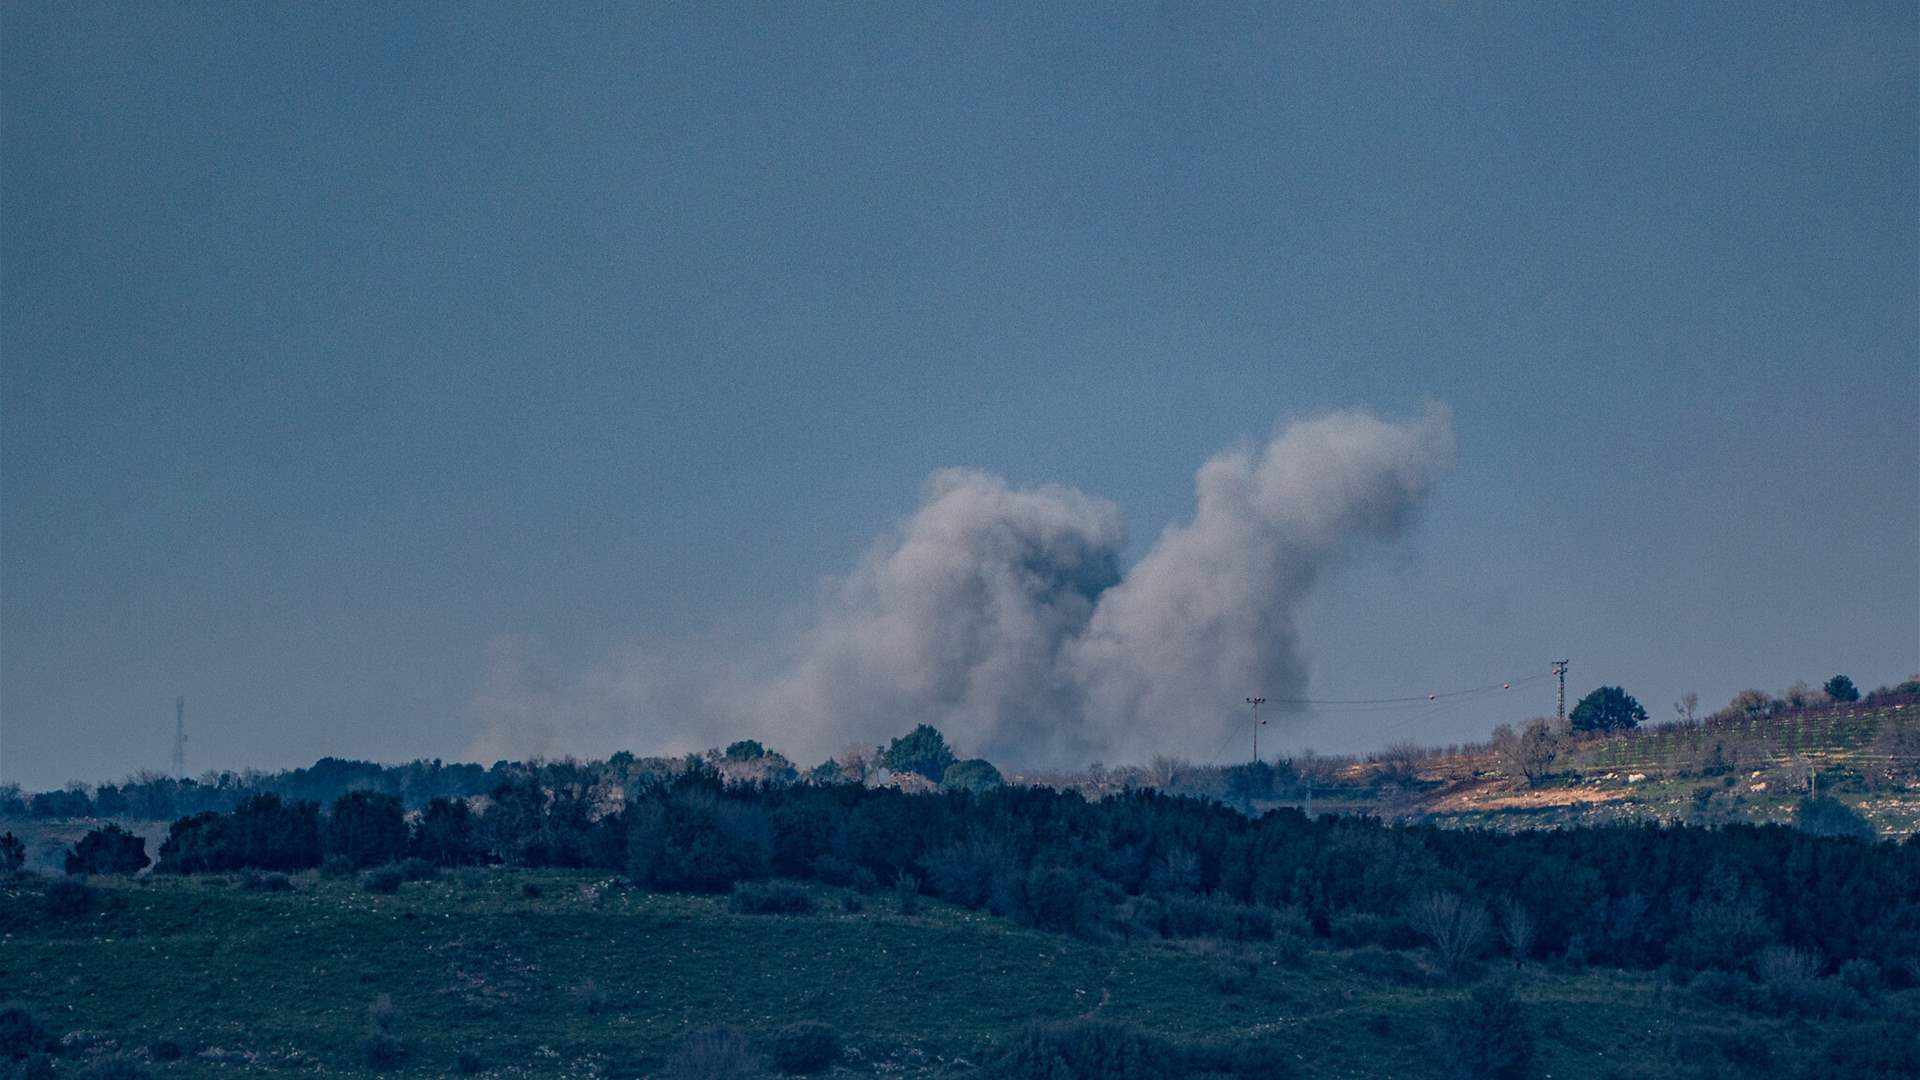 Iron Dome intercepts projectiles over Marjaayoun Plain